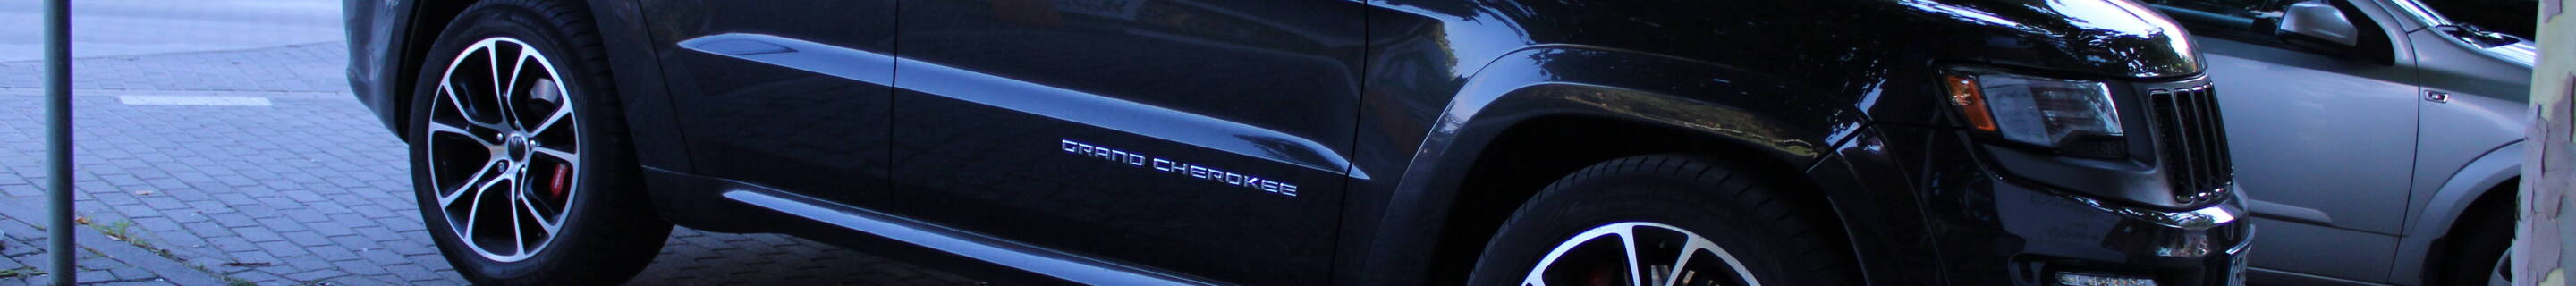 Jeep Grand Cherokee SRT 2013